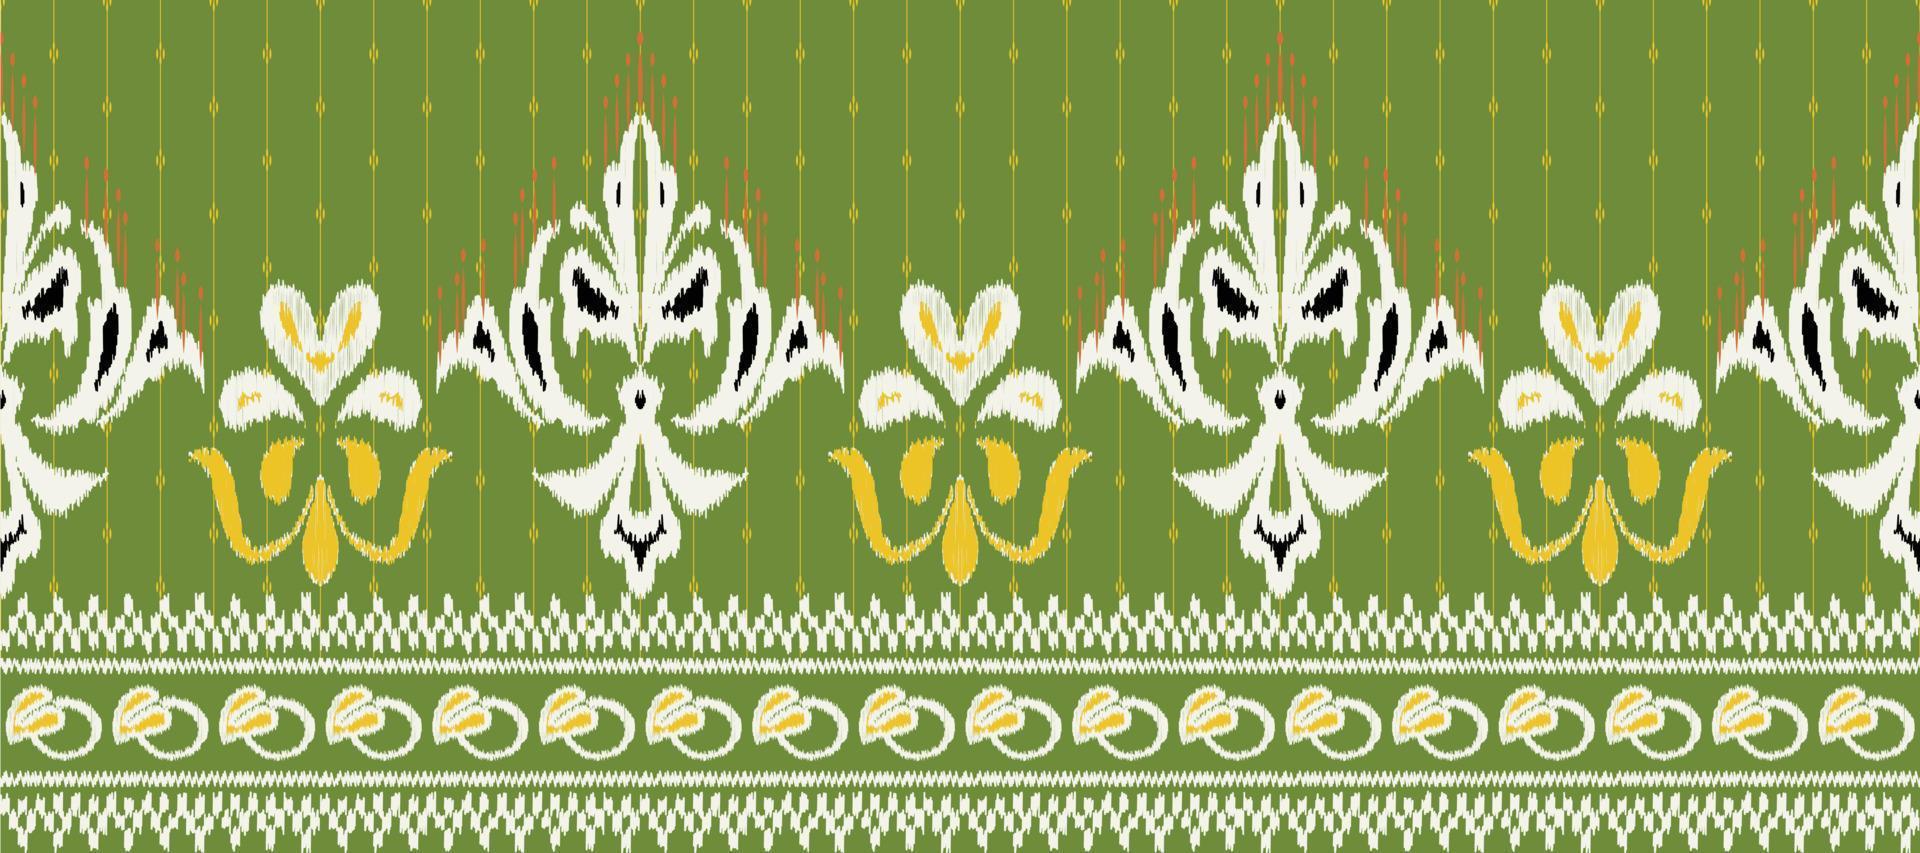 africano ikat cachemir bordado. batik textil filipino ikat sin costura modelo digital vector diseño para impresión sari curti borneo tela frontera ikkat dupatta